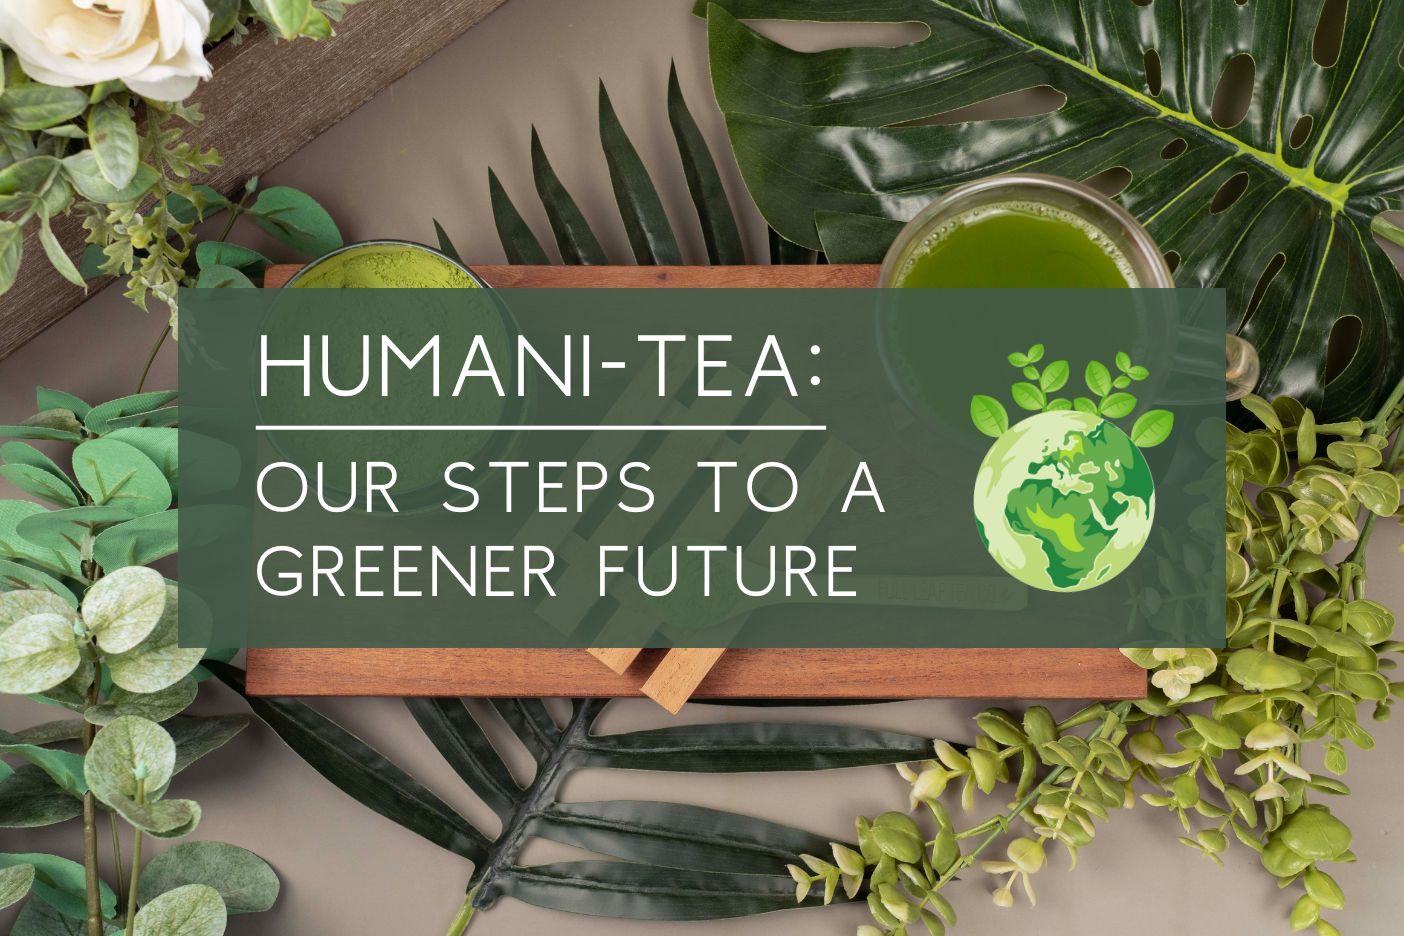 Humani-Tea: Our steps to a greener future